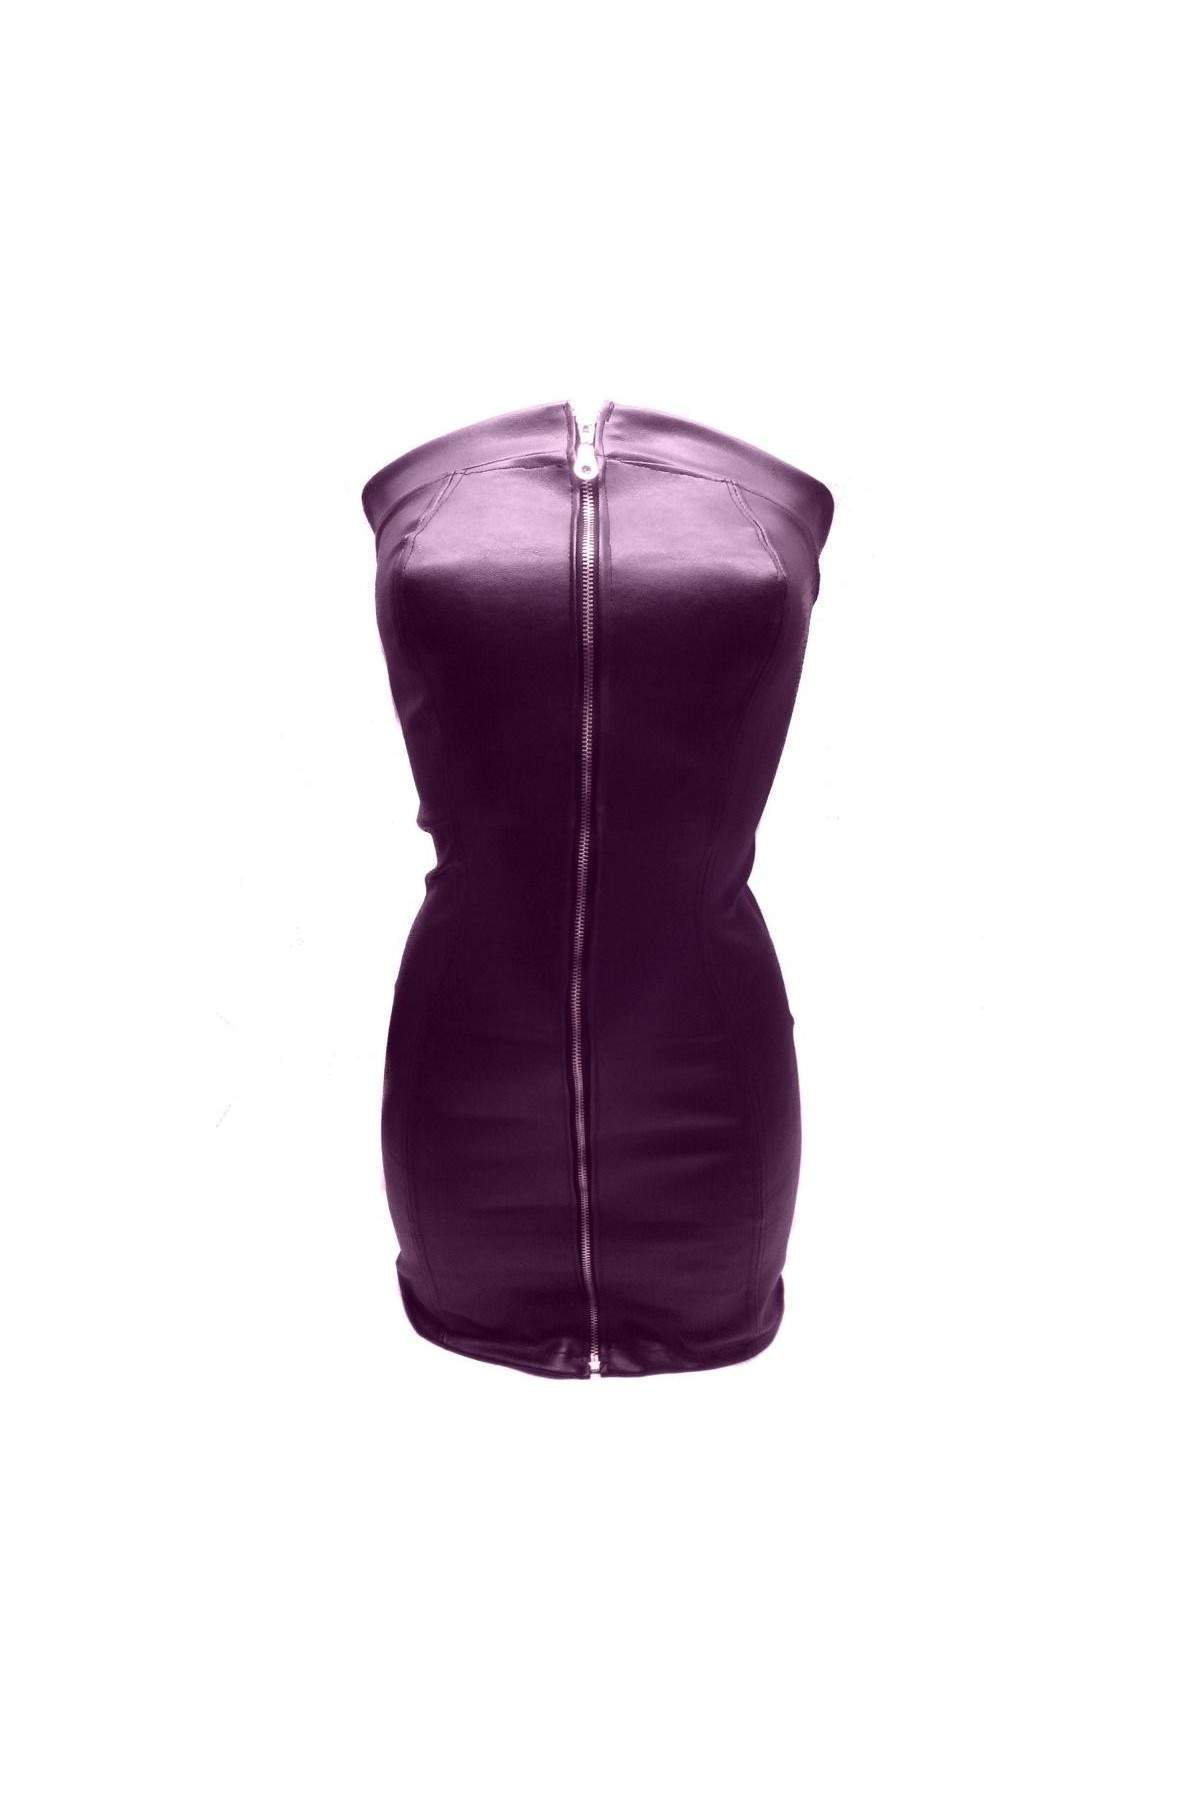 f.girth designer leather dress purple 29,00 € - 